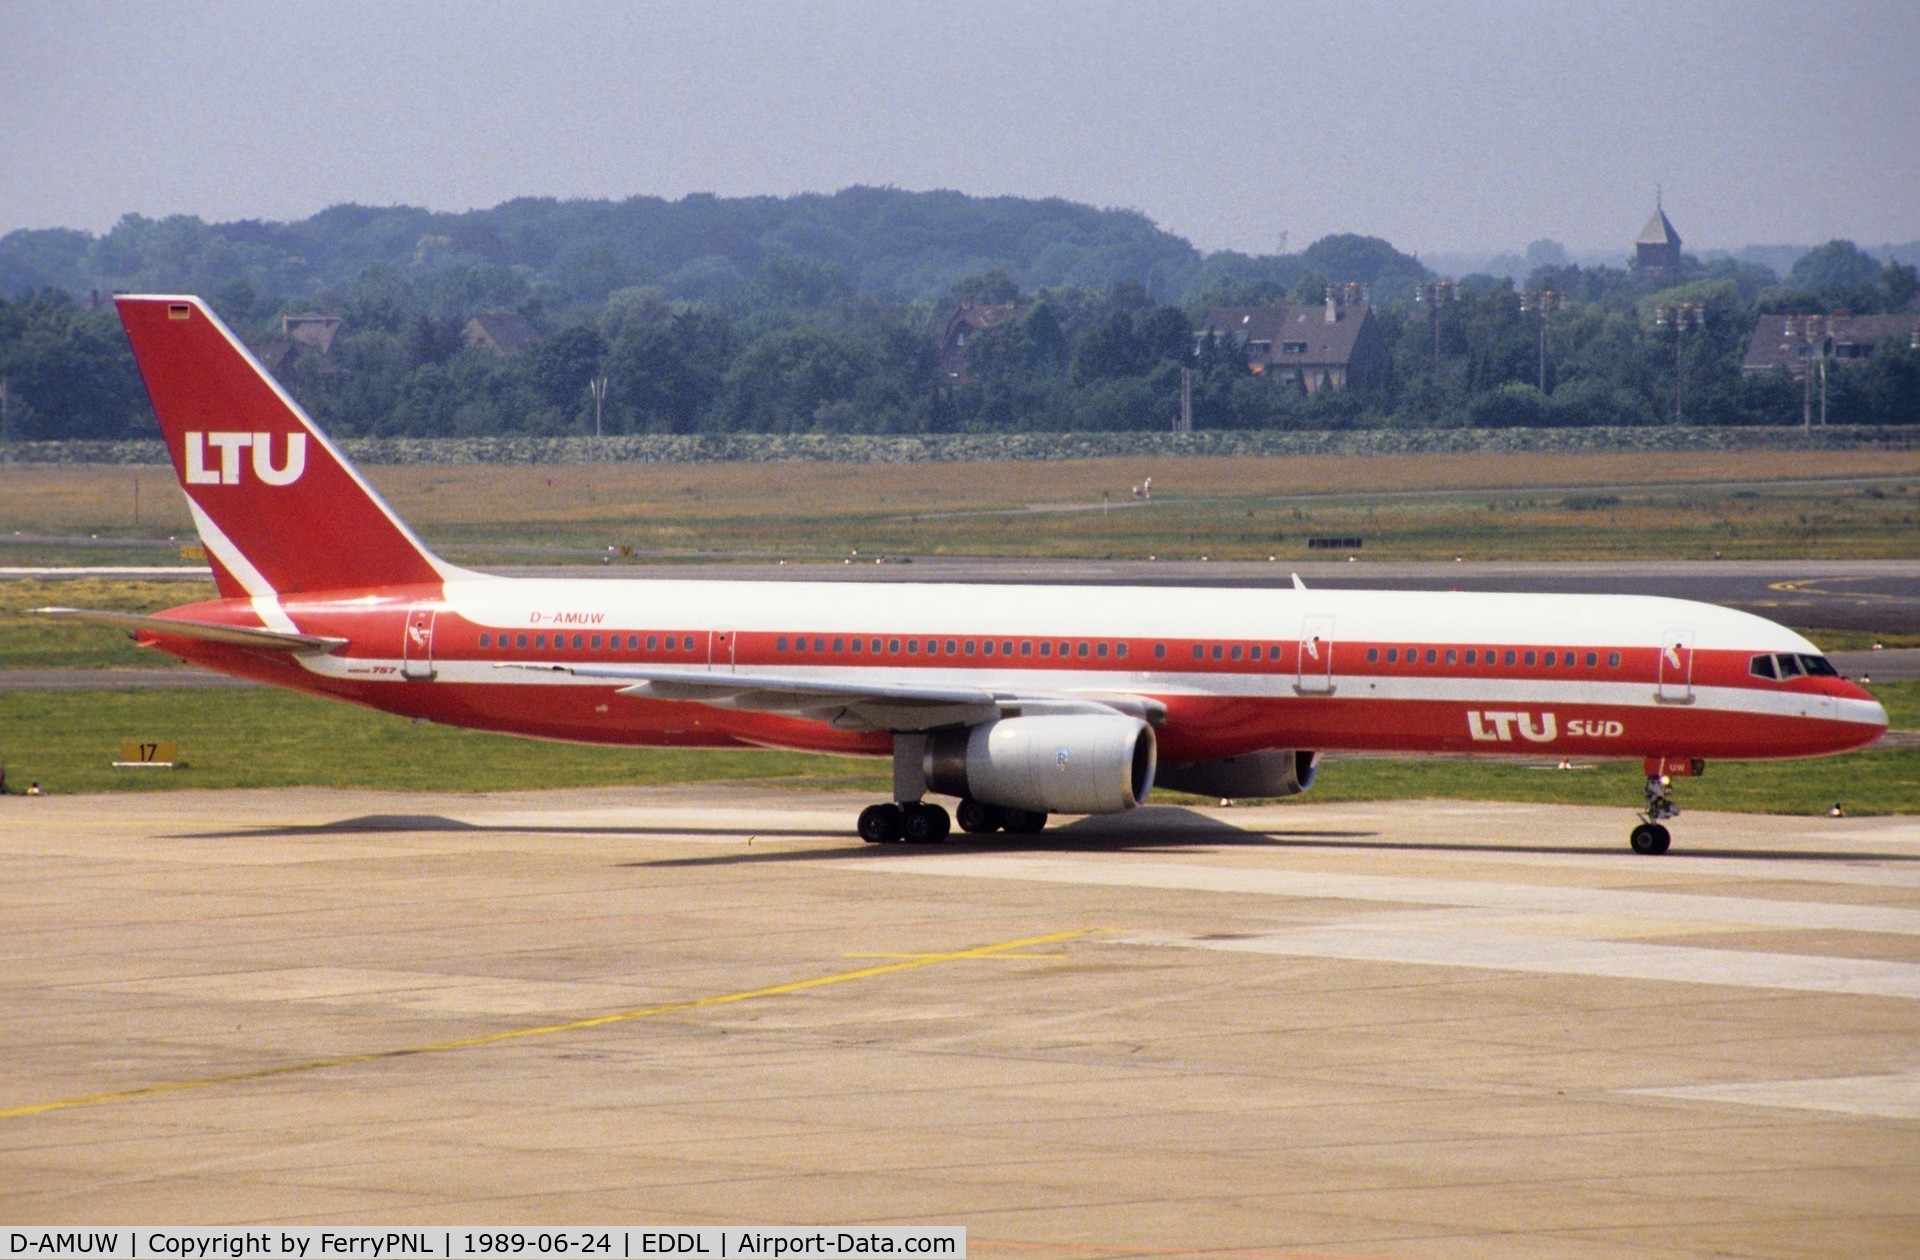 D-AMUW, 1987 Boeing 757-2G5 C/N 23929, LTU Sud B752 for departure